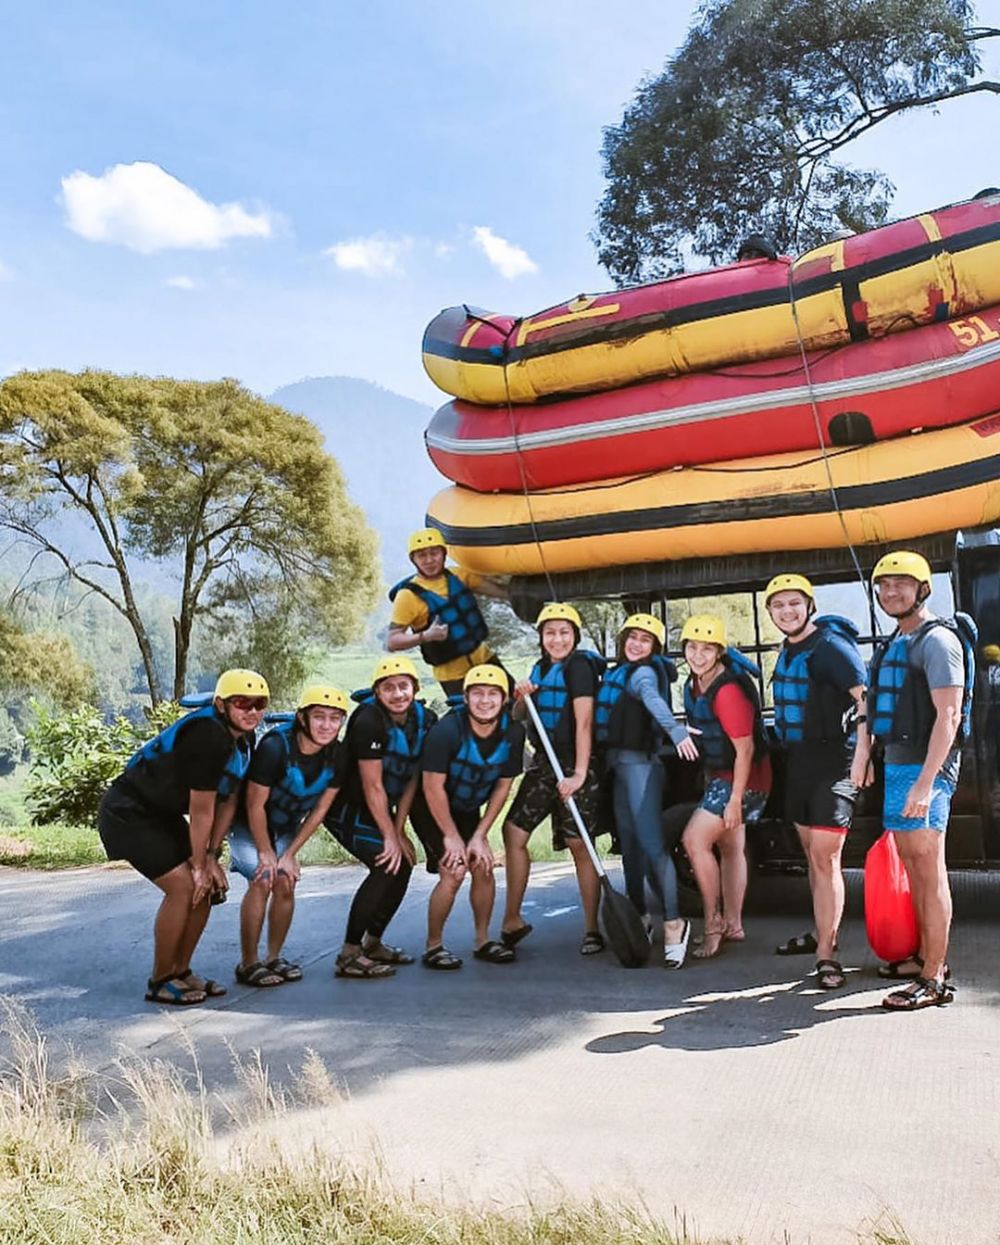 8 Momen liburan Cita Citata camping hingga rafting, penuh keseruan